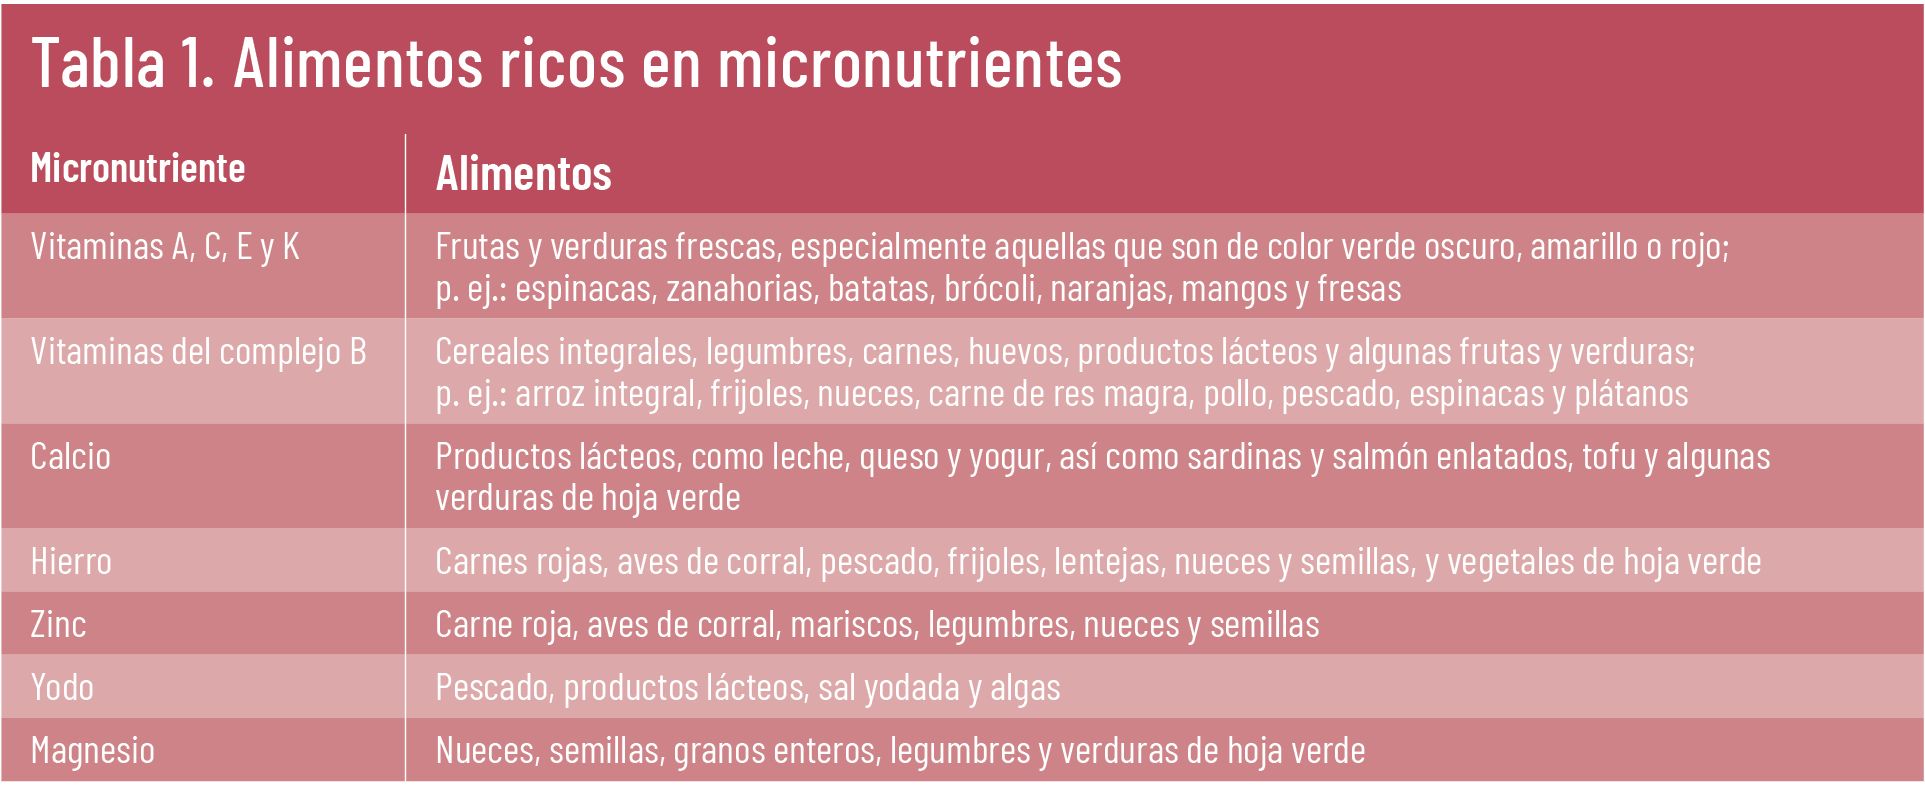 26 EF 622 TE INTERESA Micronutrientes tabla 01